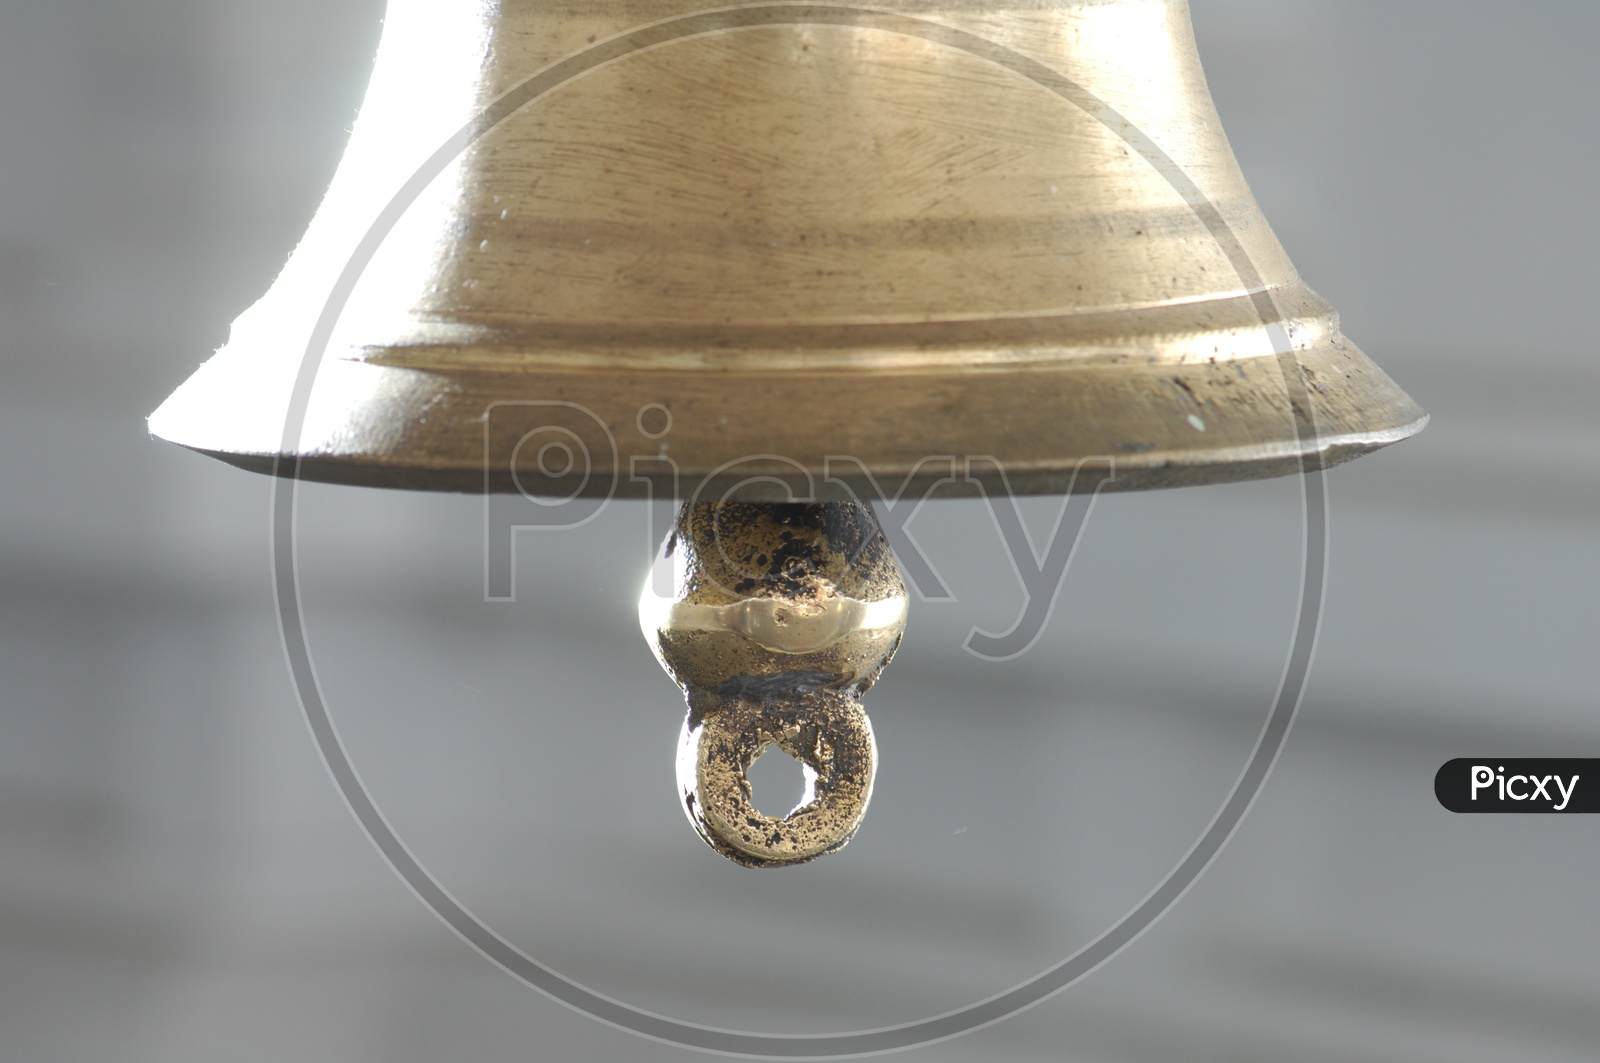 A big metal bell